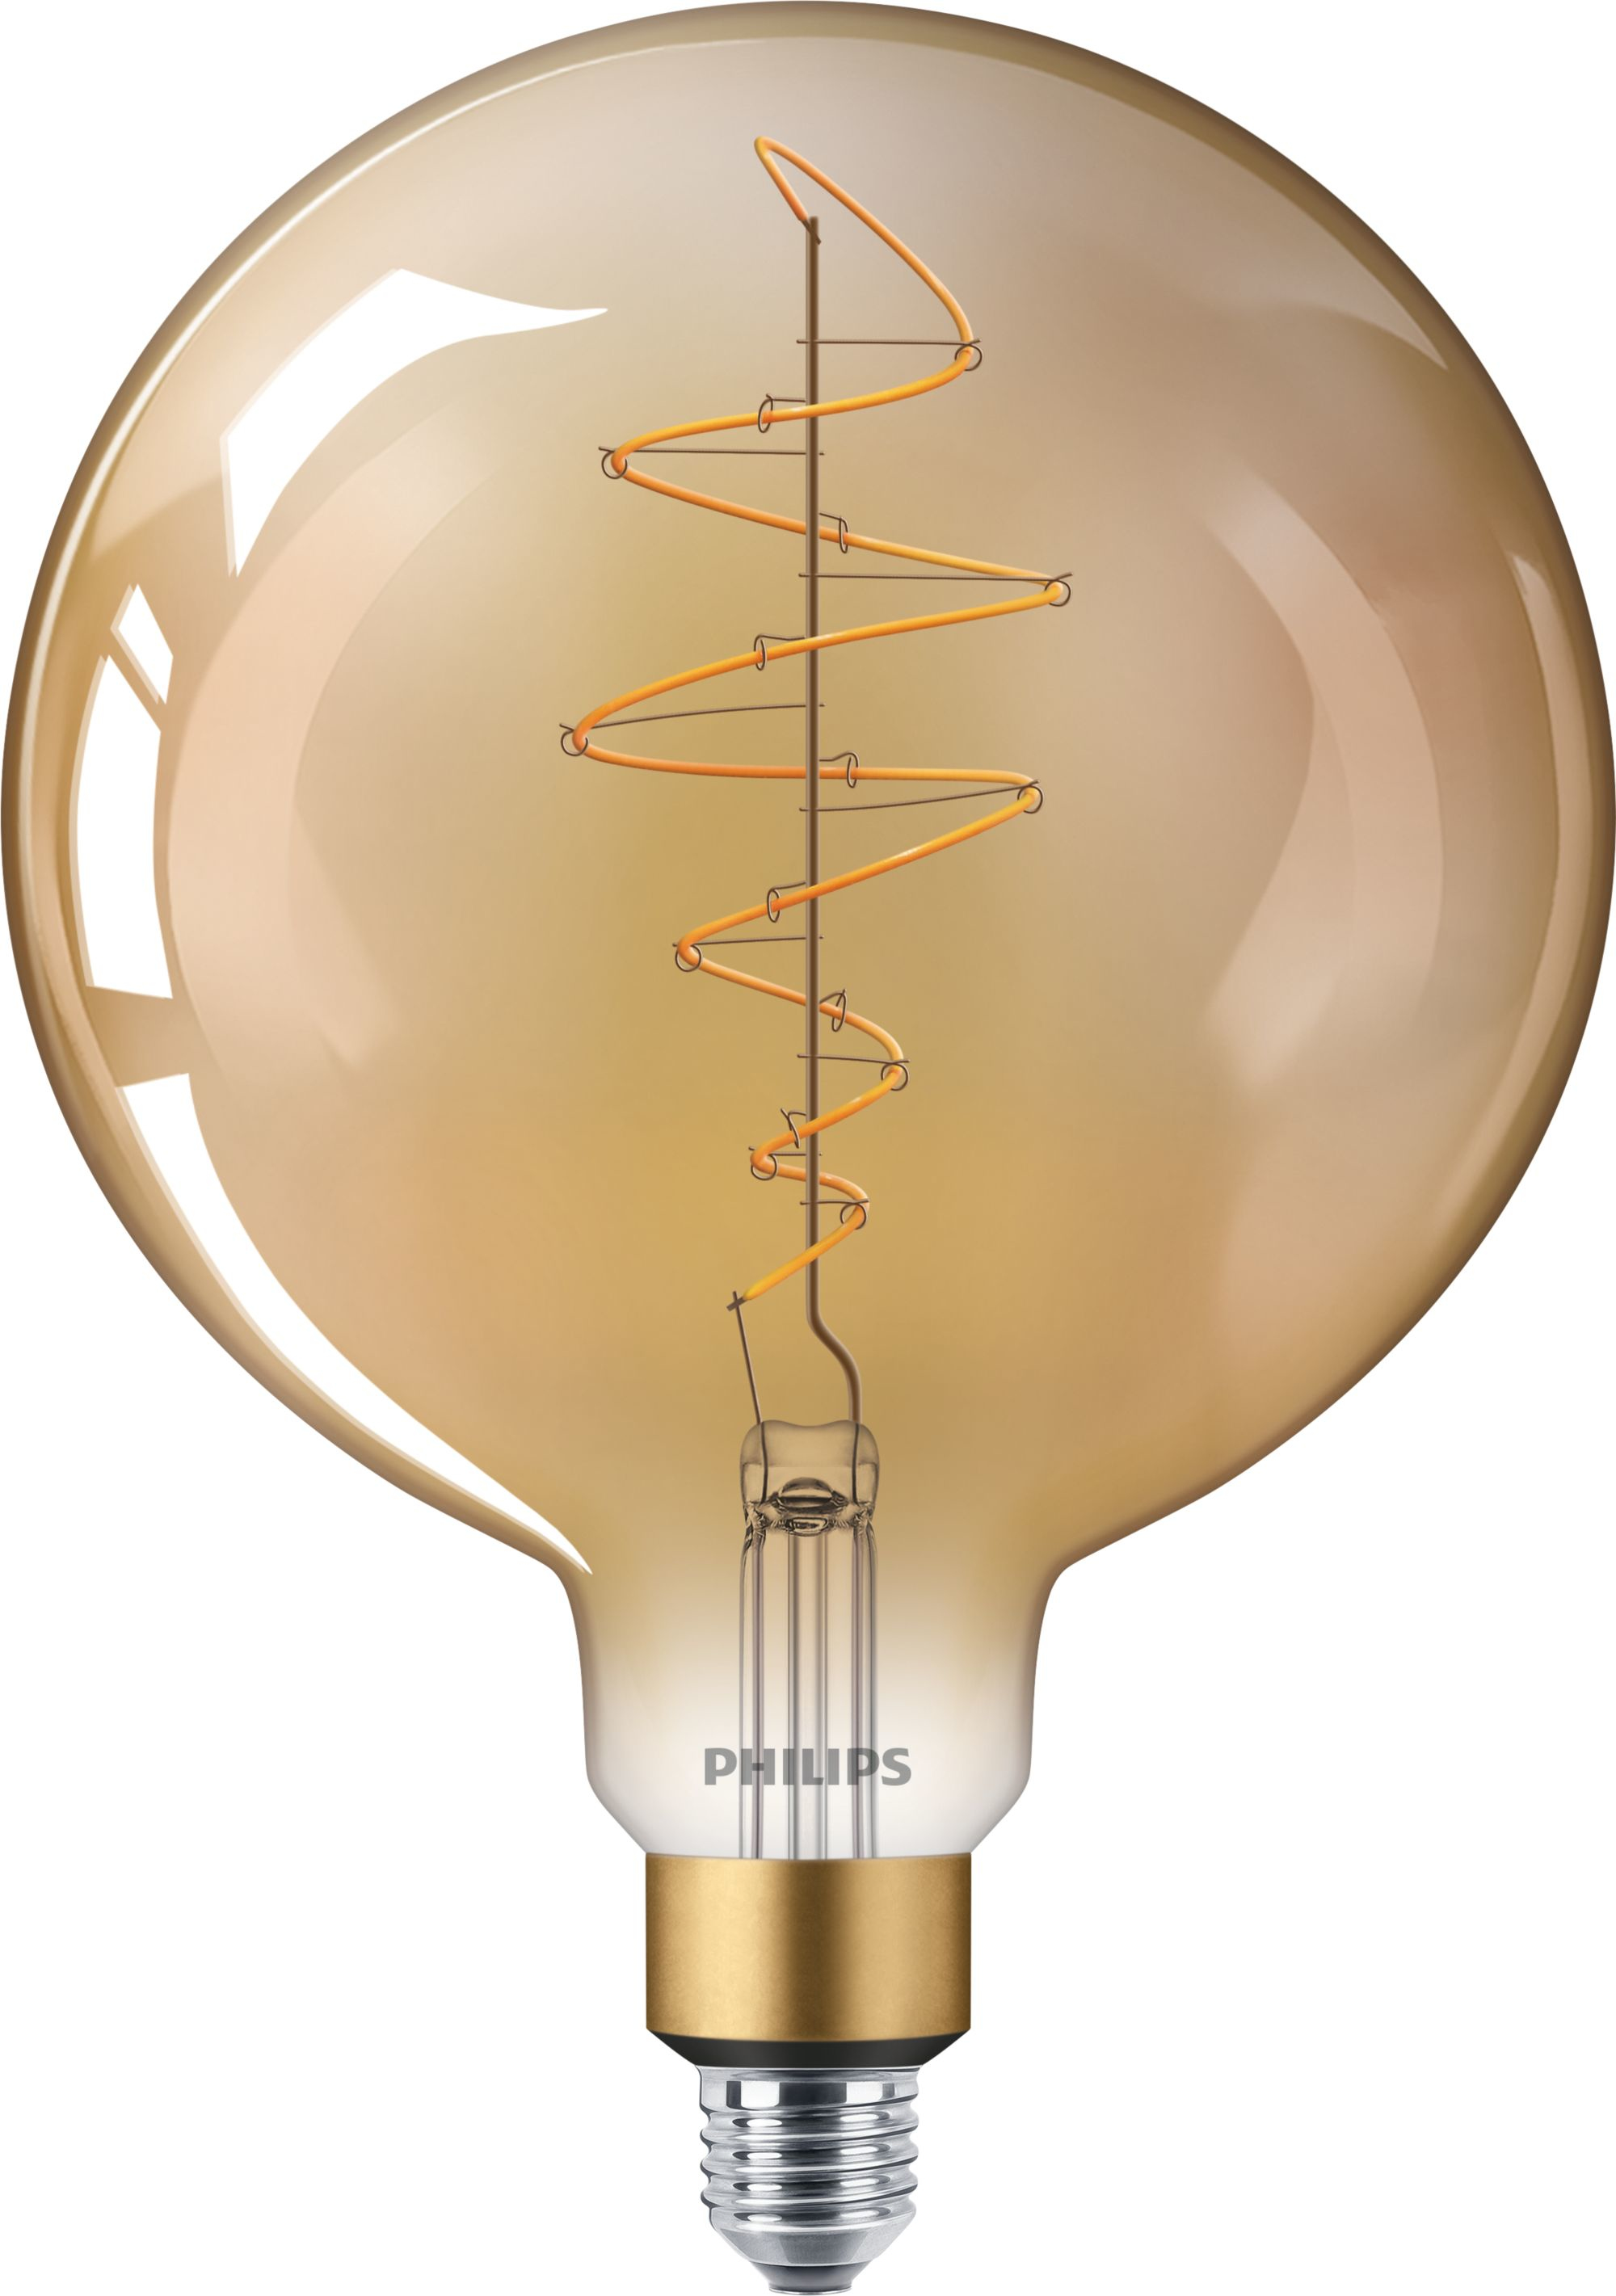 Philips LED Lampe Vintage XL-Globe 40W E27 dimmbar gold 1er